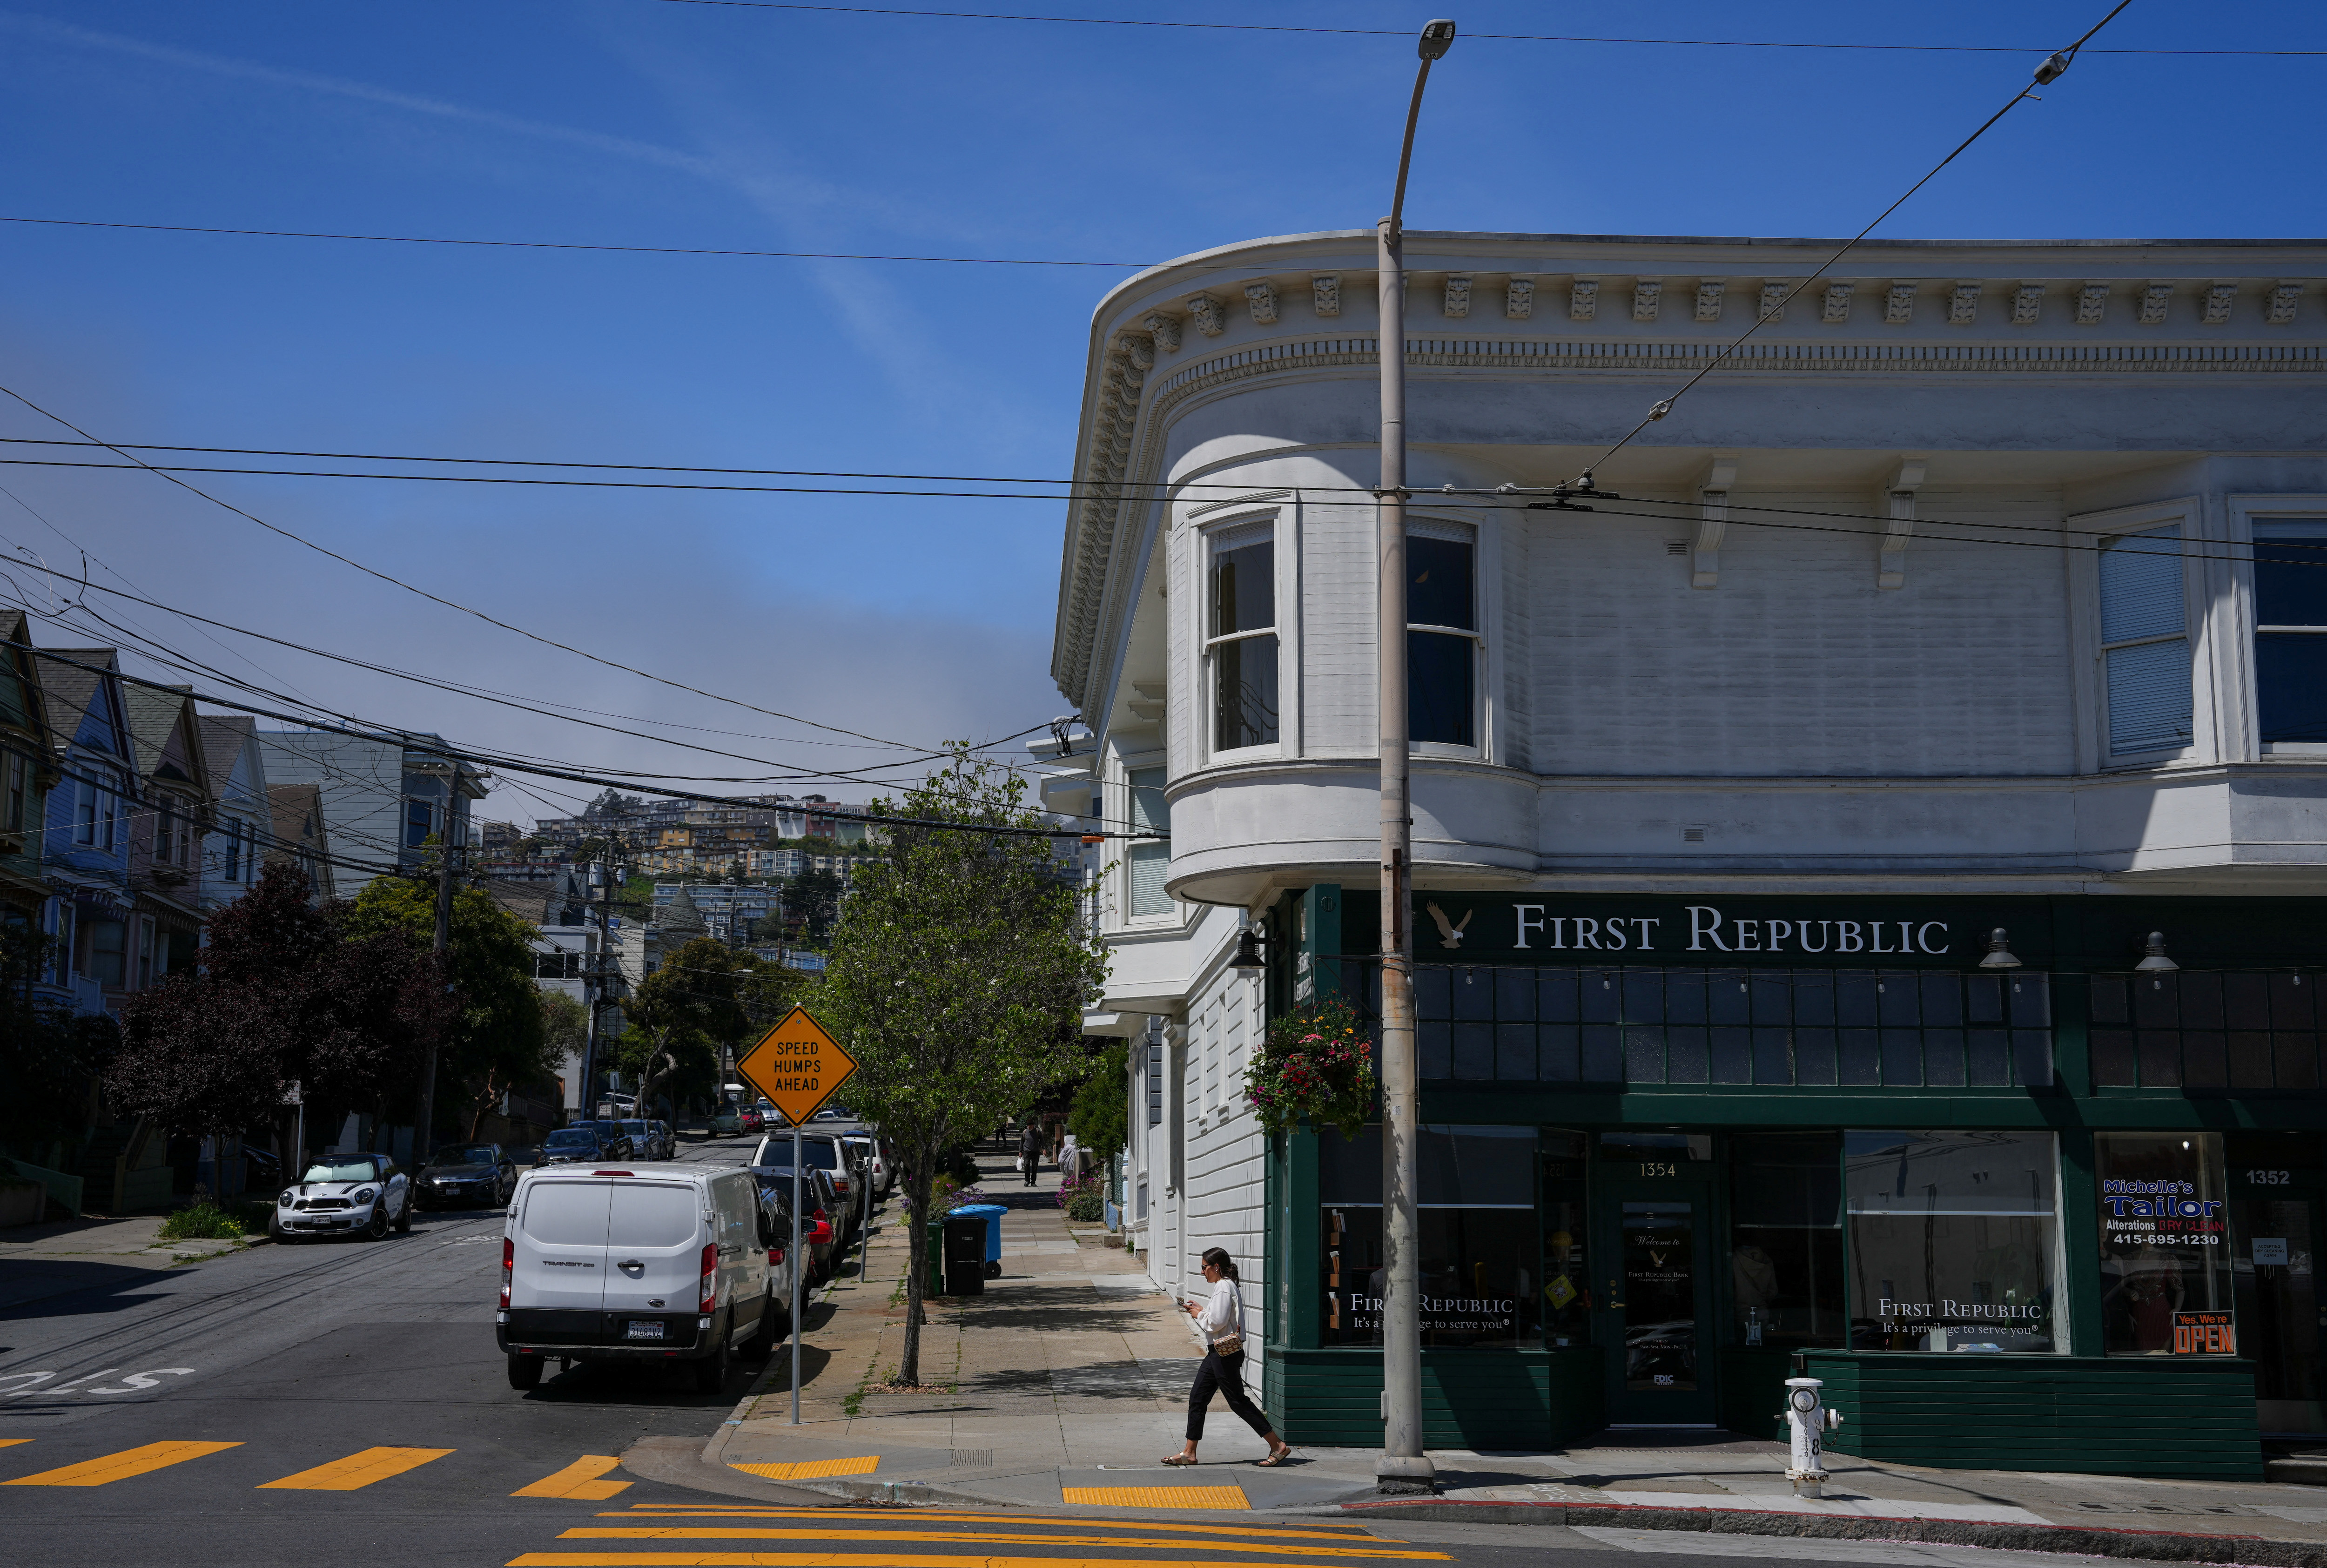 First Republic Bank branch in San Francisco